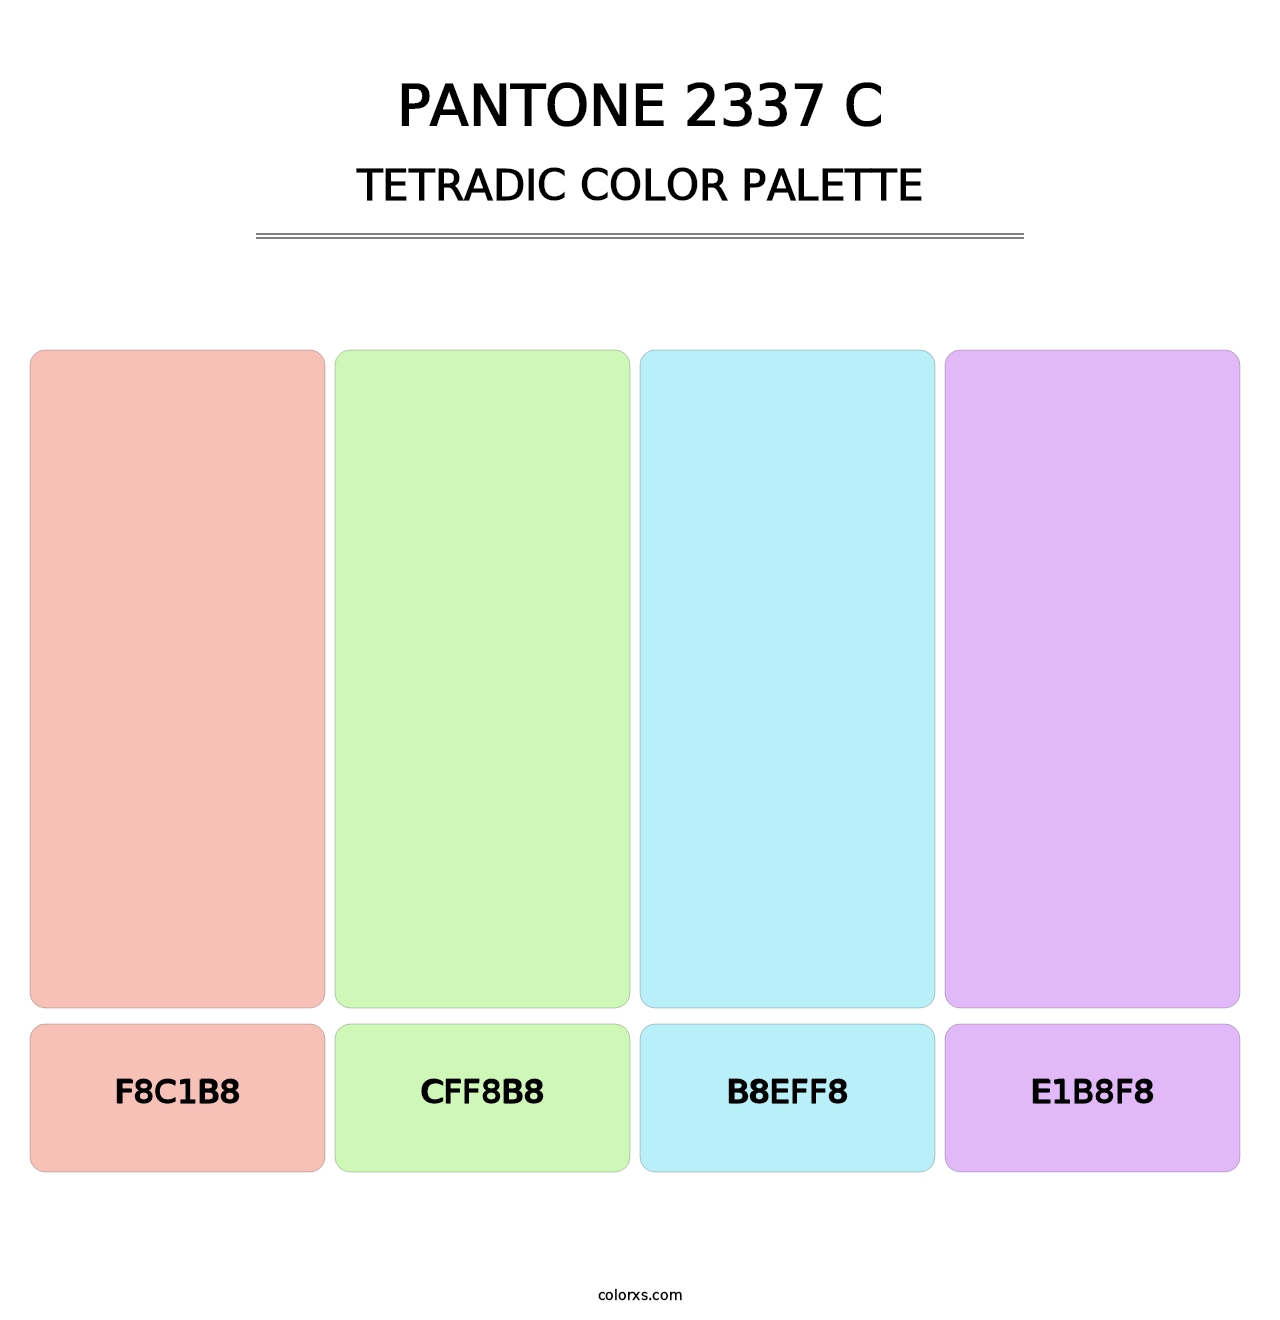 PANTONE 2337 C - Tetradic Color Palette